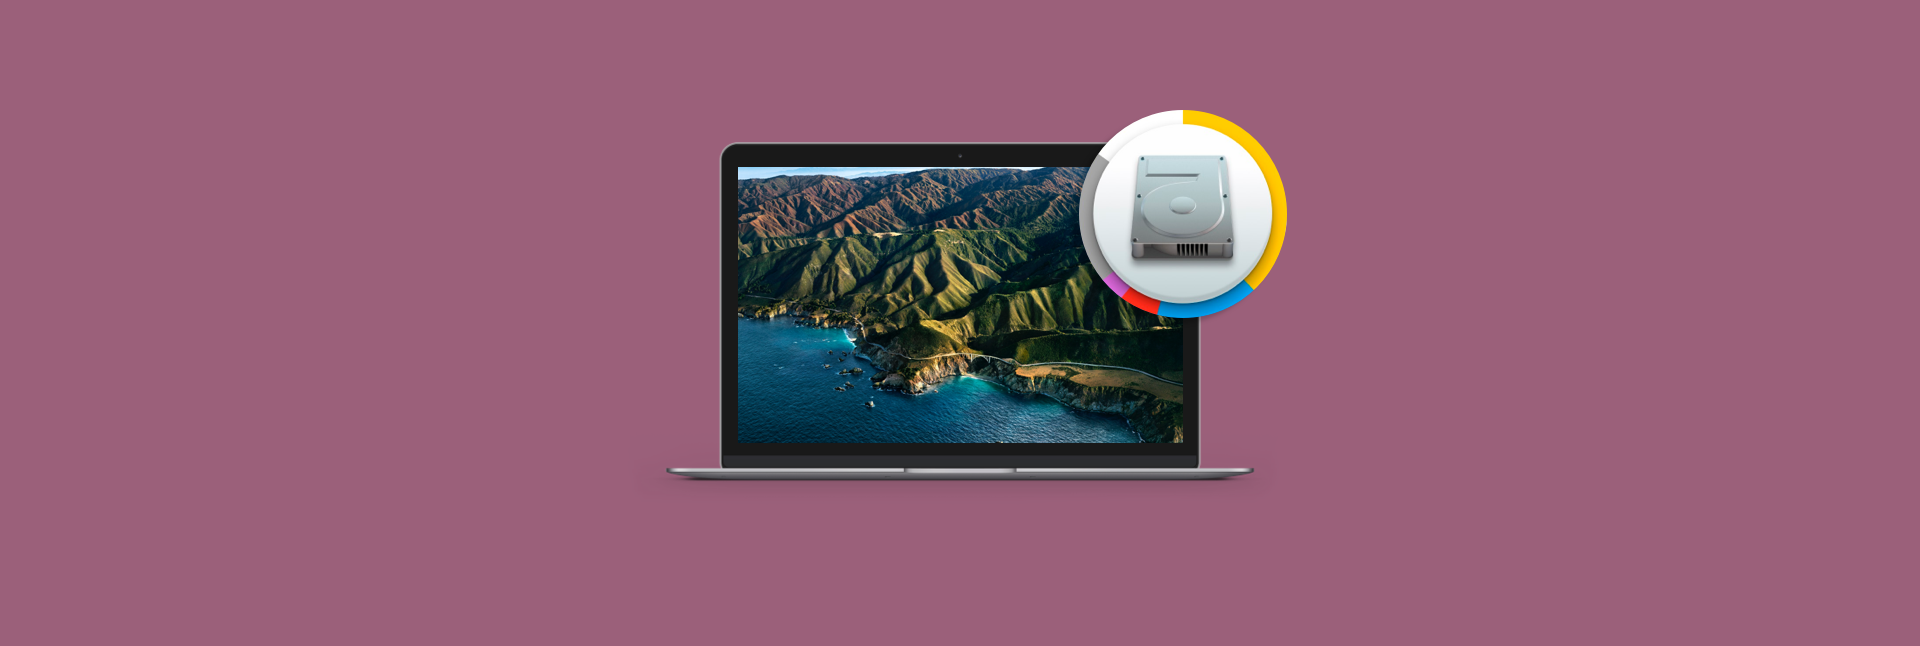 mac powerbook pro device id lookup